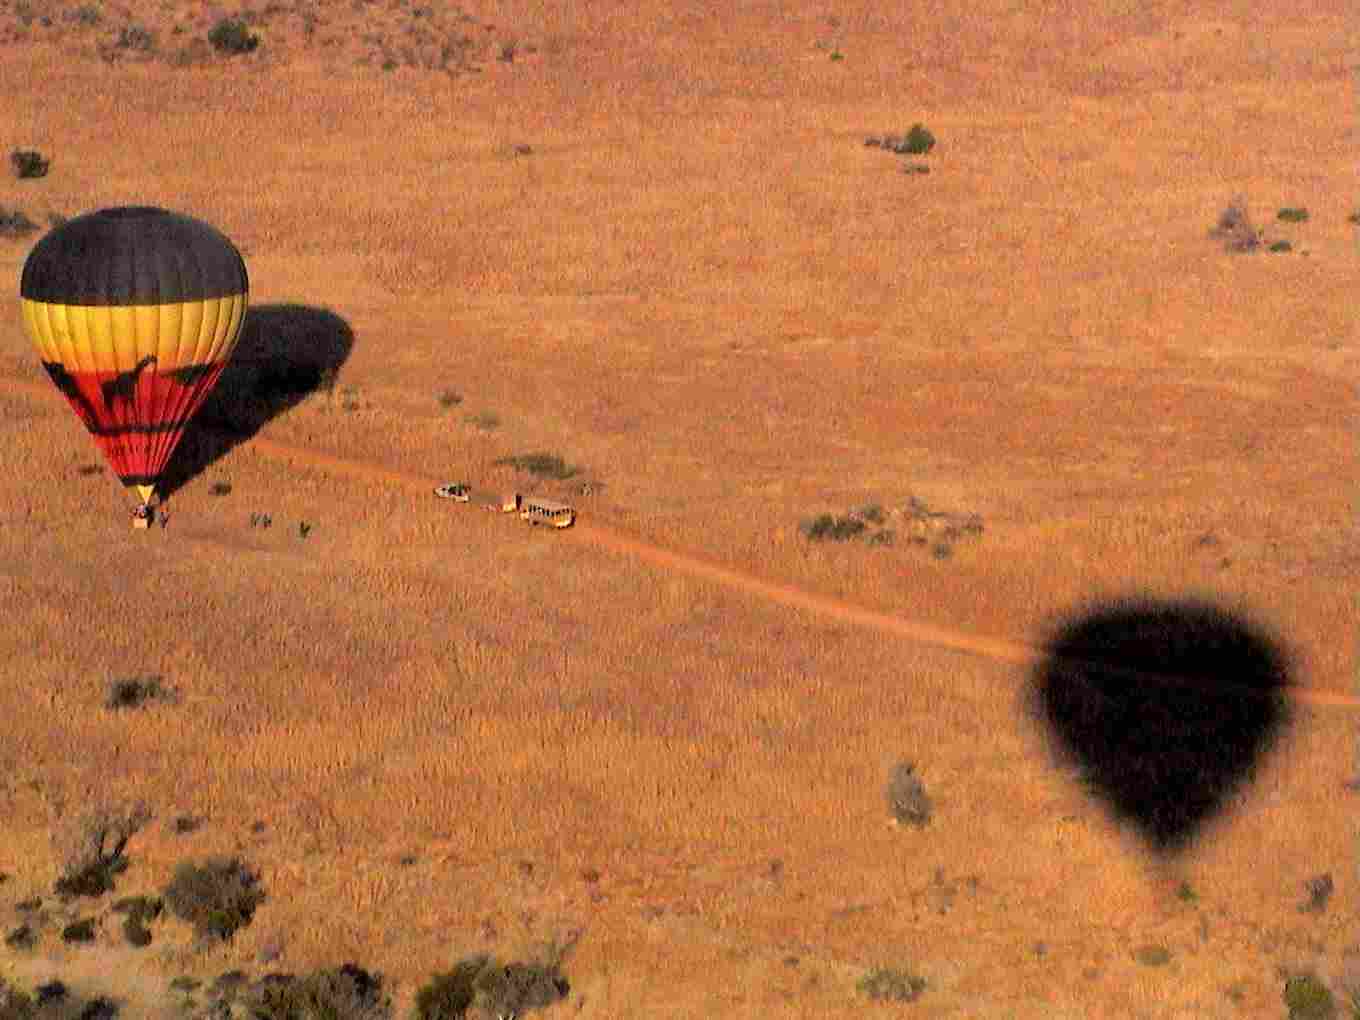 Balloon ride in Pilanesberg National Park